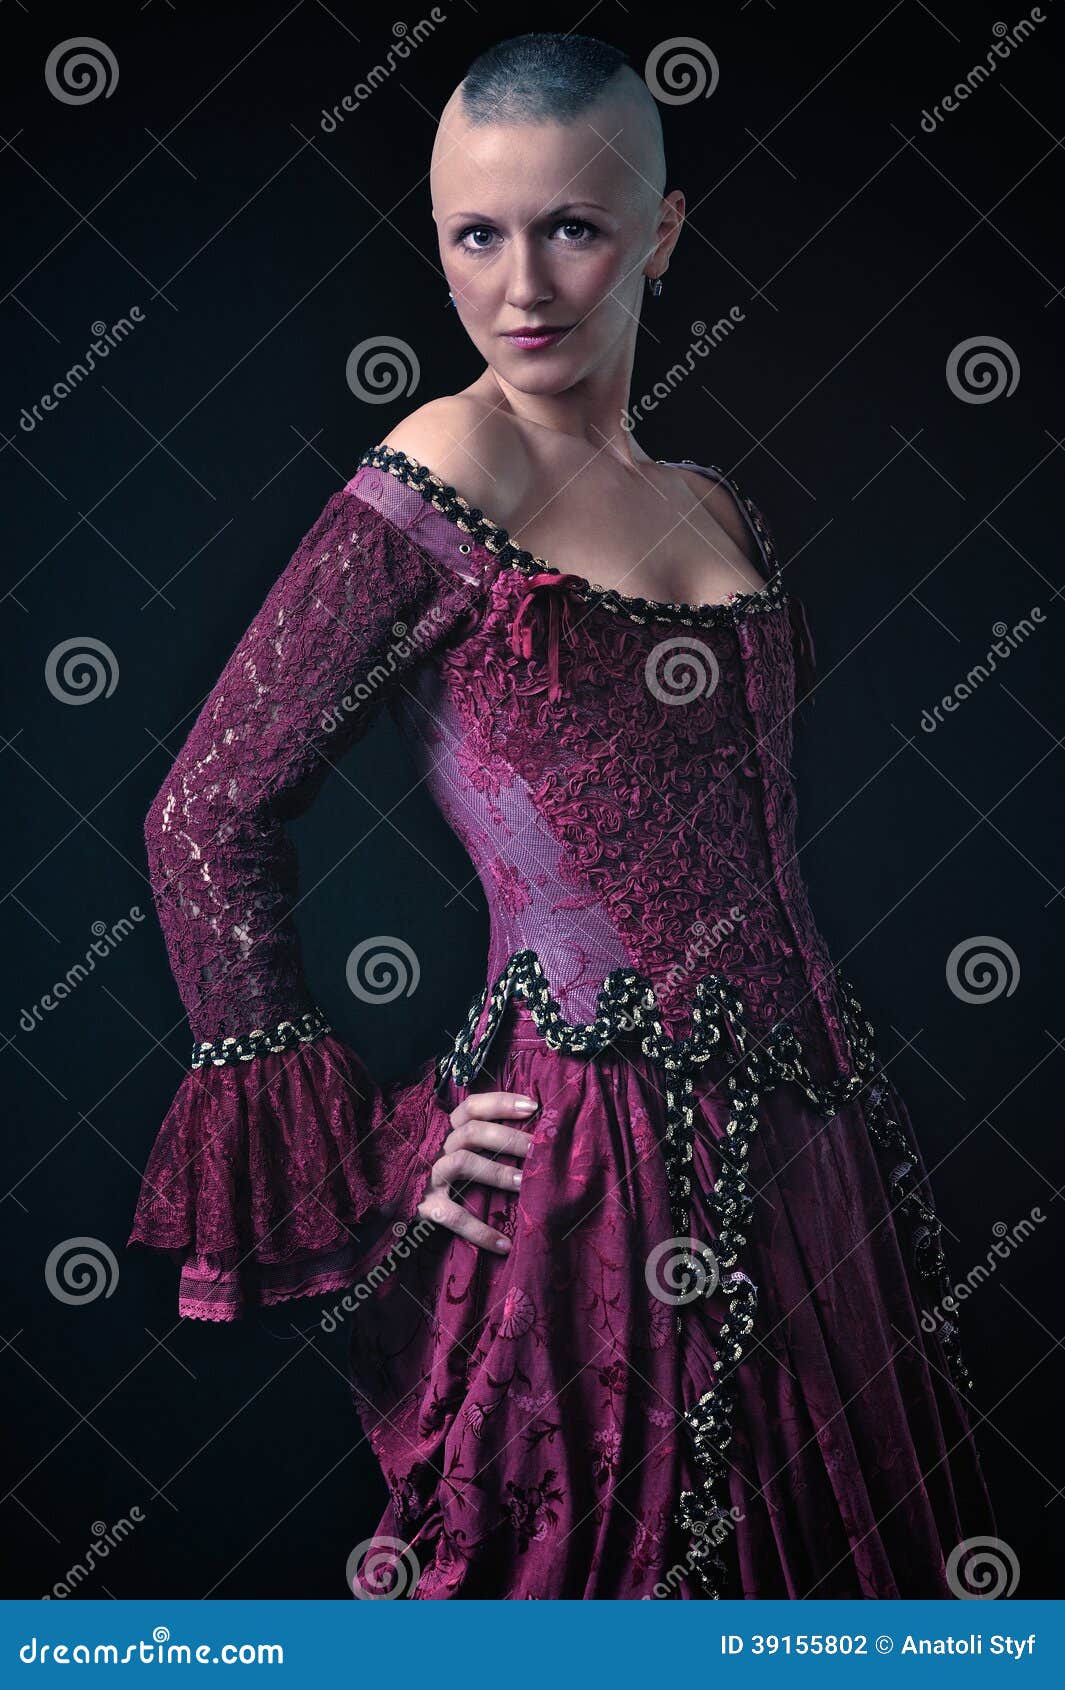 Renaissance Dress Stock Photo - Image: 39155802